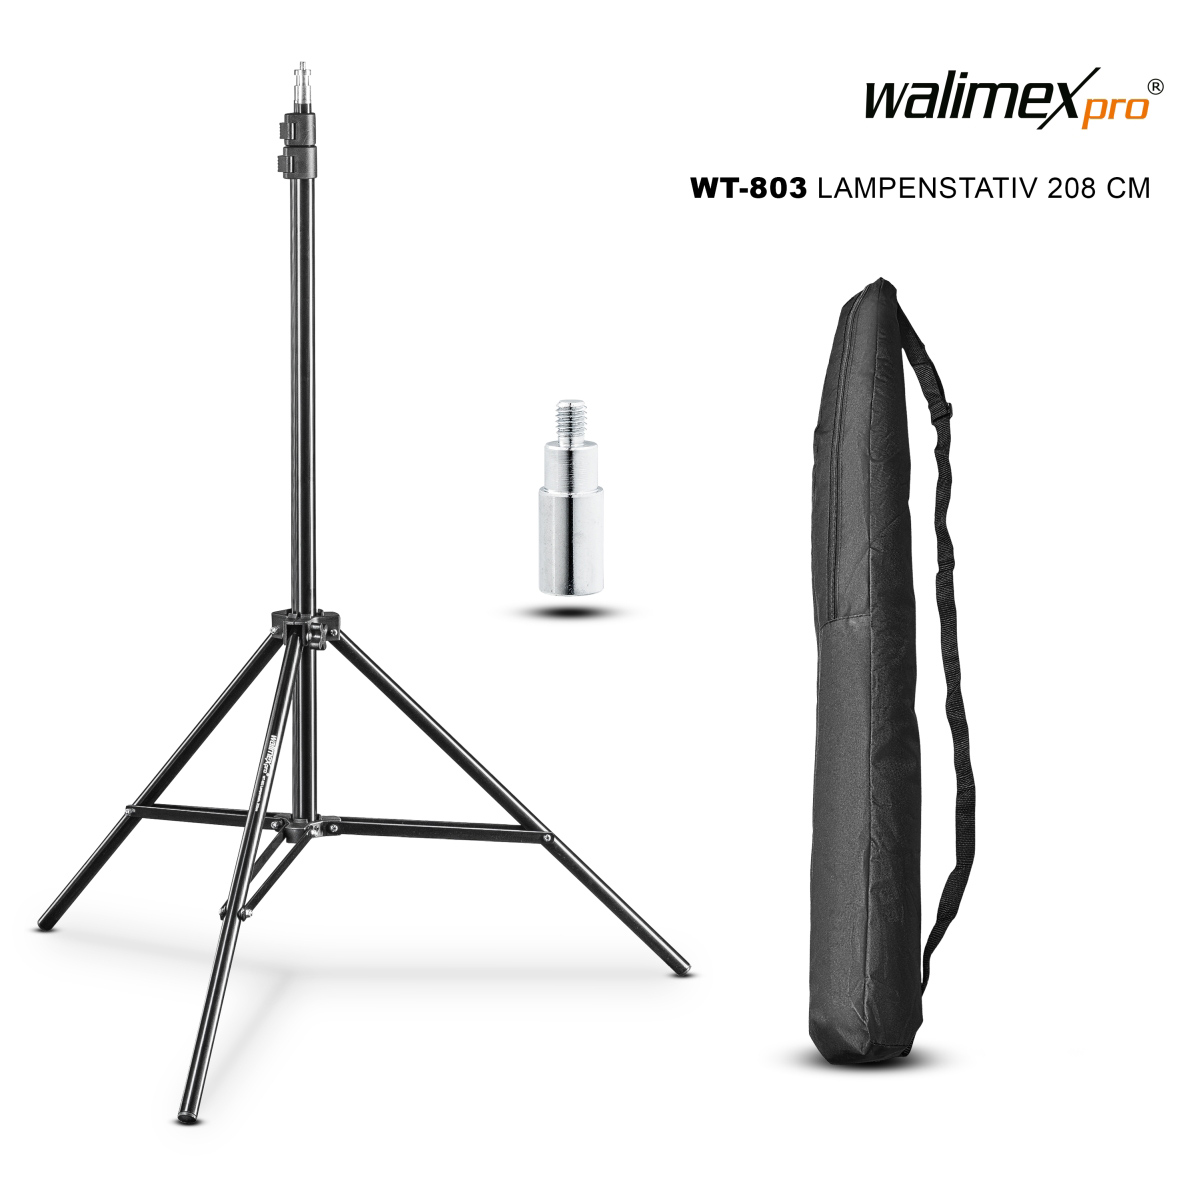 Walimex pro WT-803 Lampenstativ